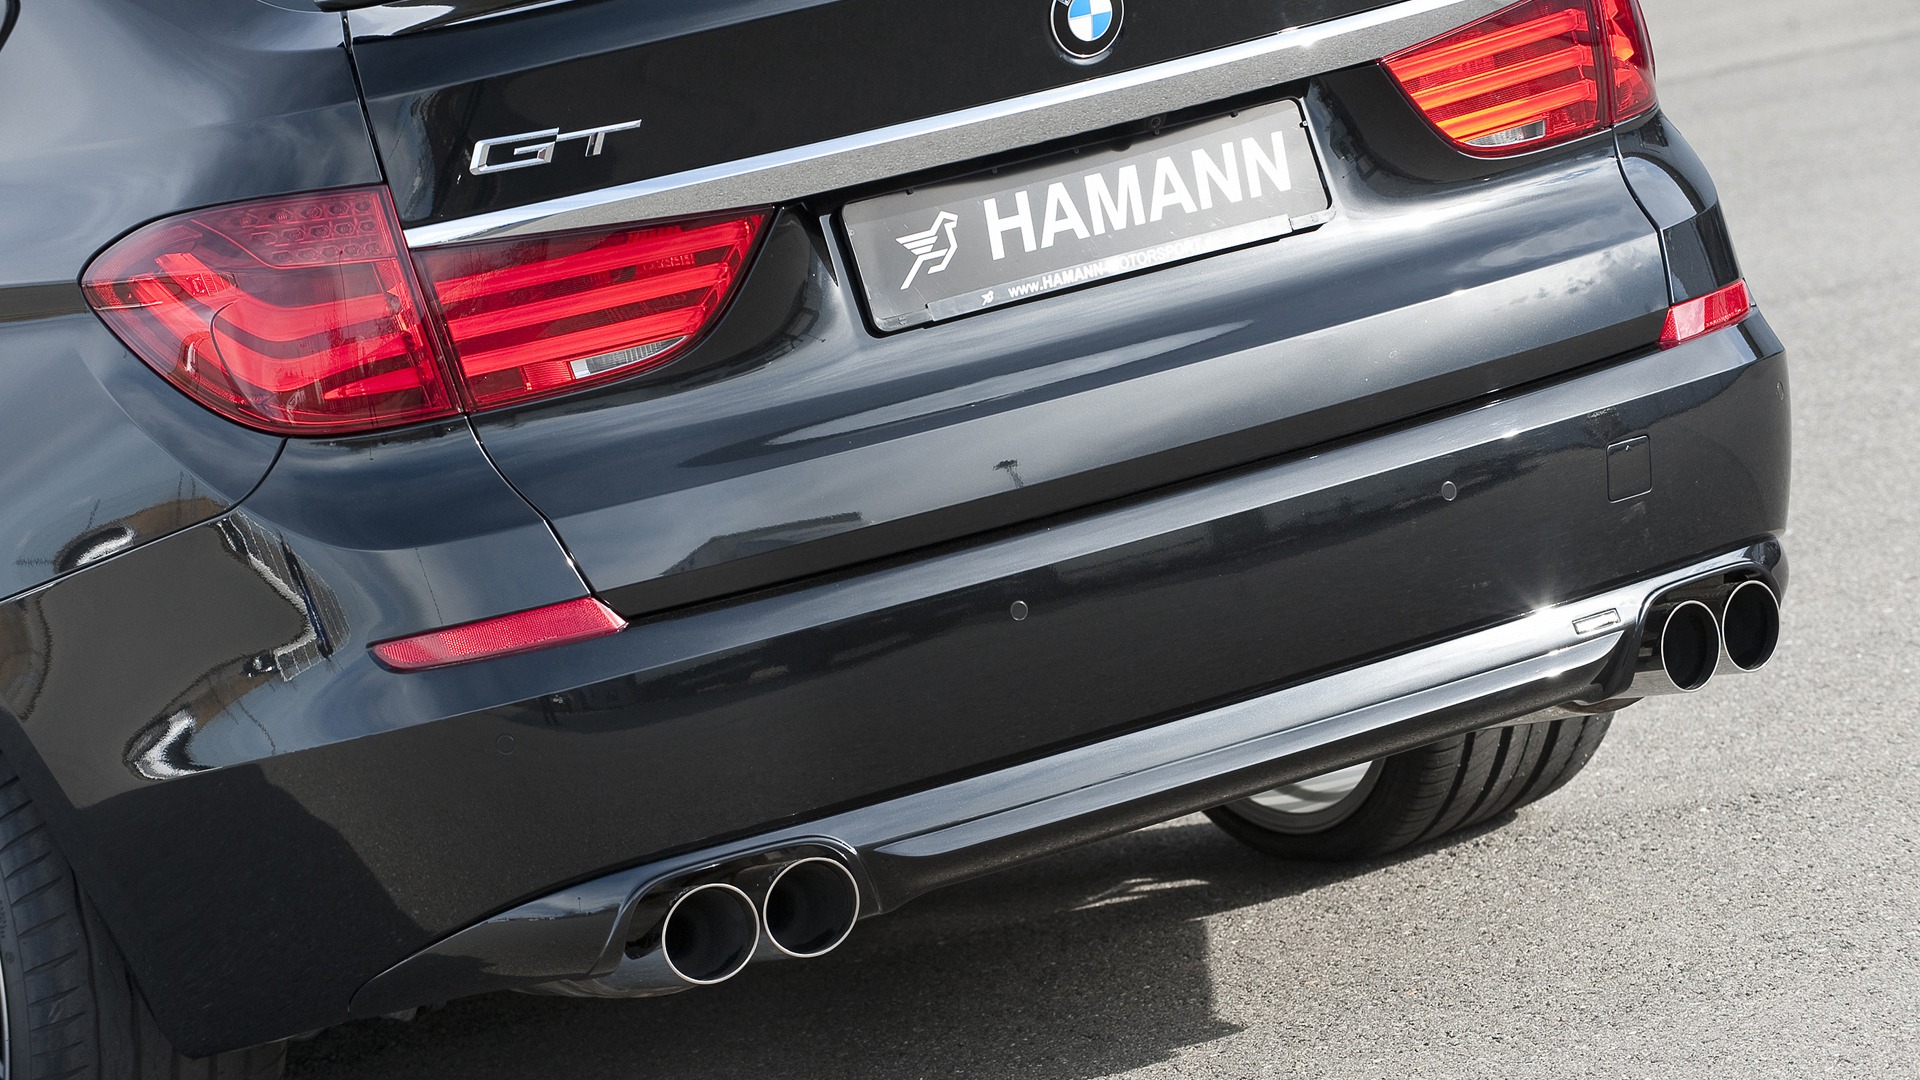 Hamann BMW 5-Series Gran Turismo - 2010 宝马23 - 1920x1080